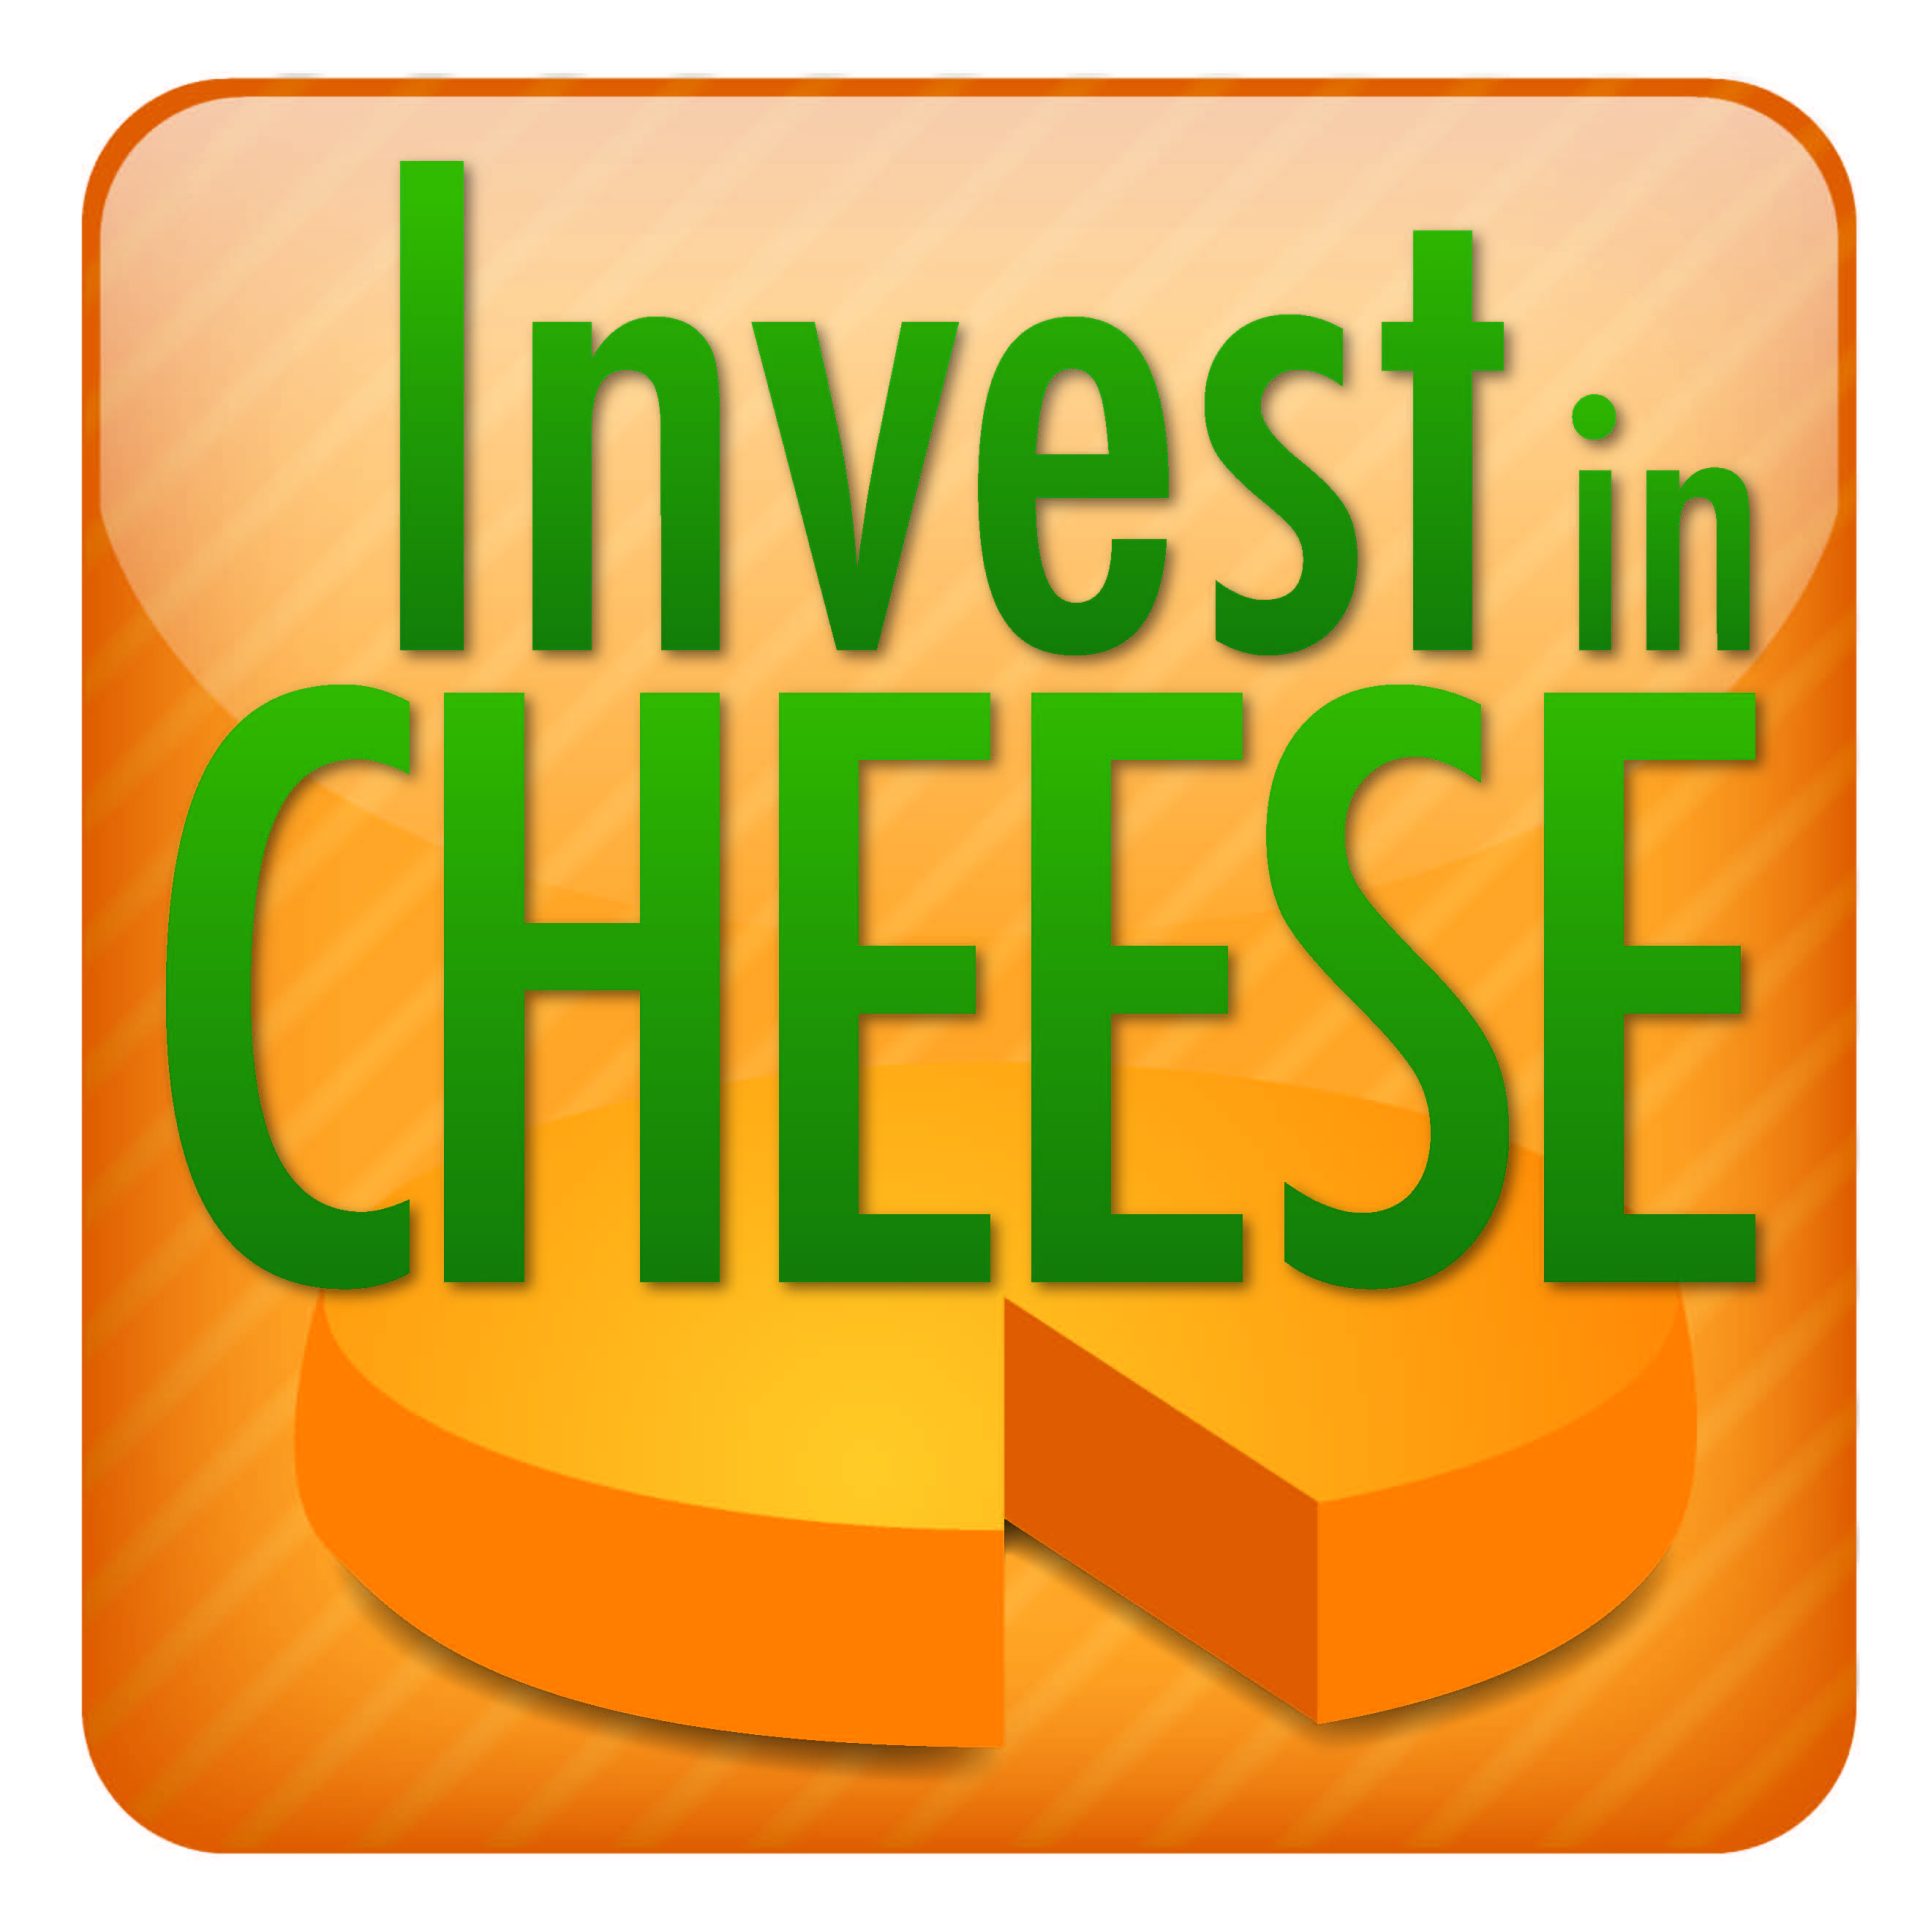 Cool Artisan Cheese iPad app